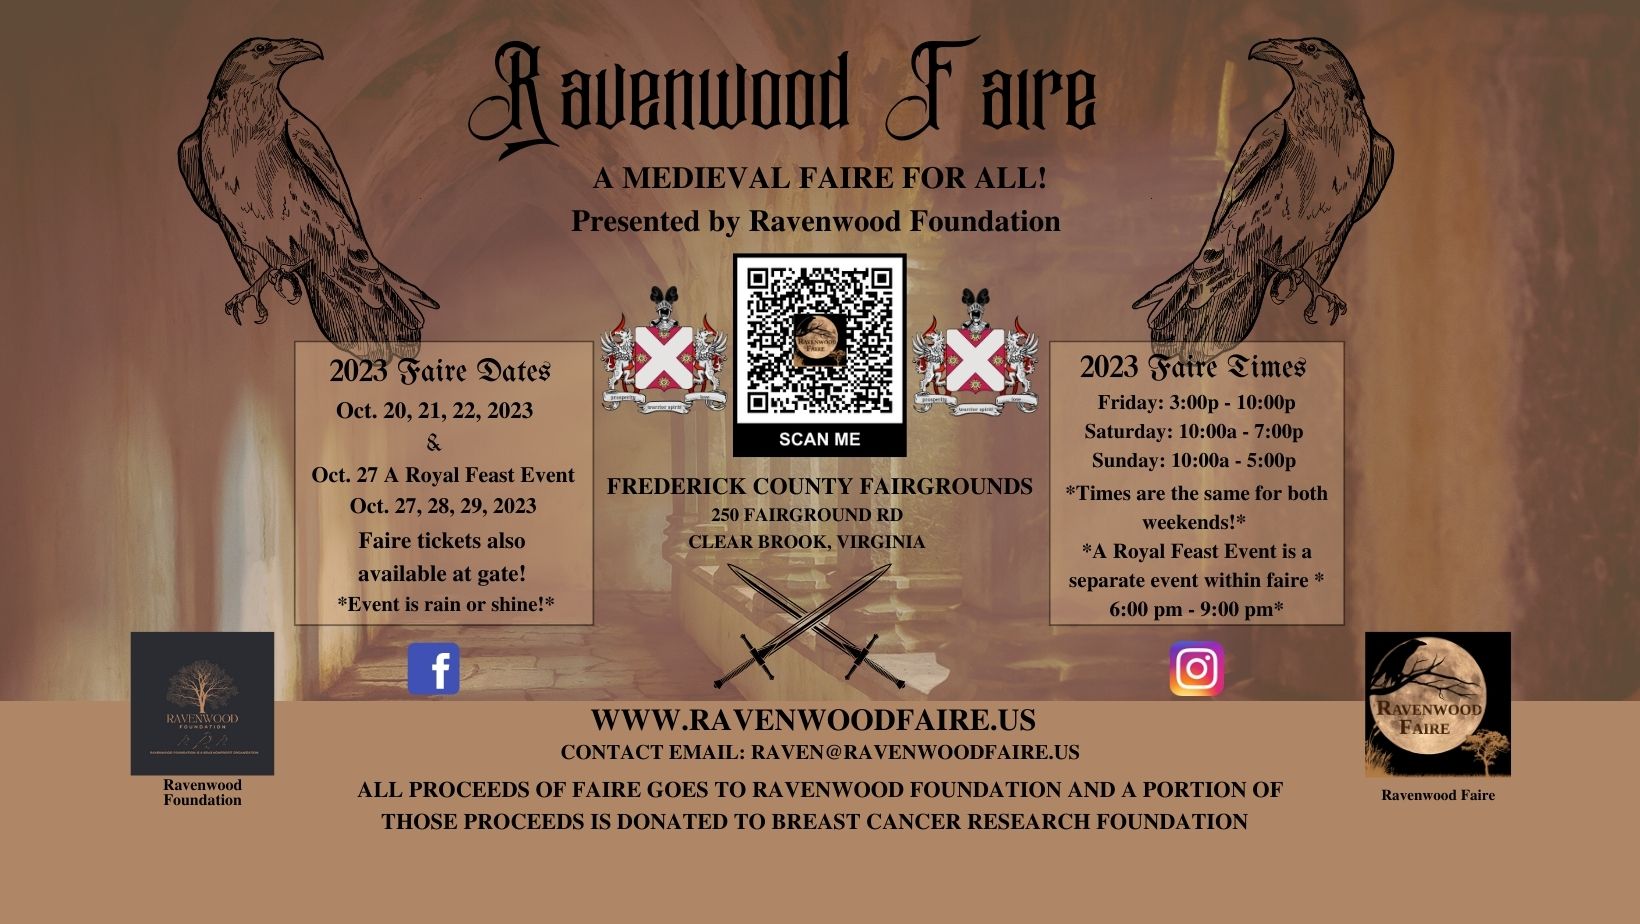 Ravenwood Faire presented by Ravenwood Foundation cover image